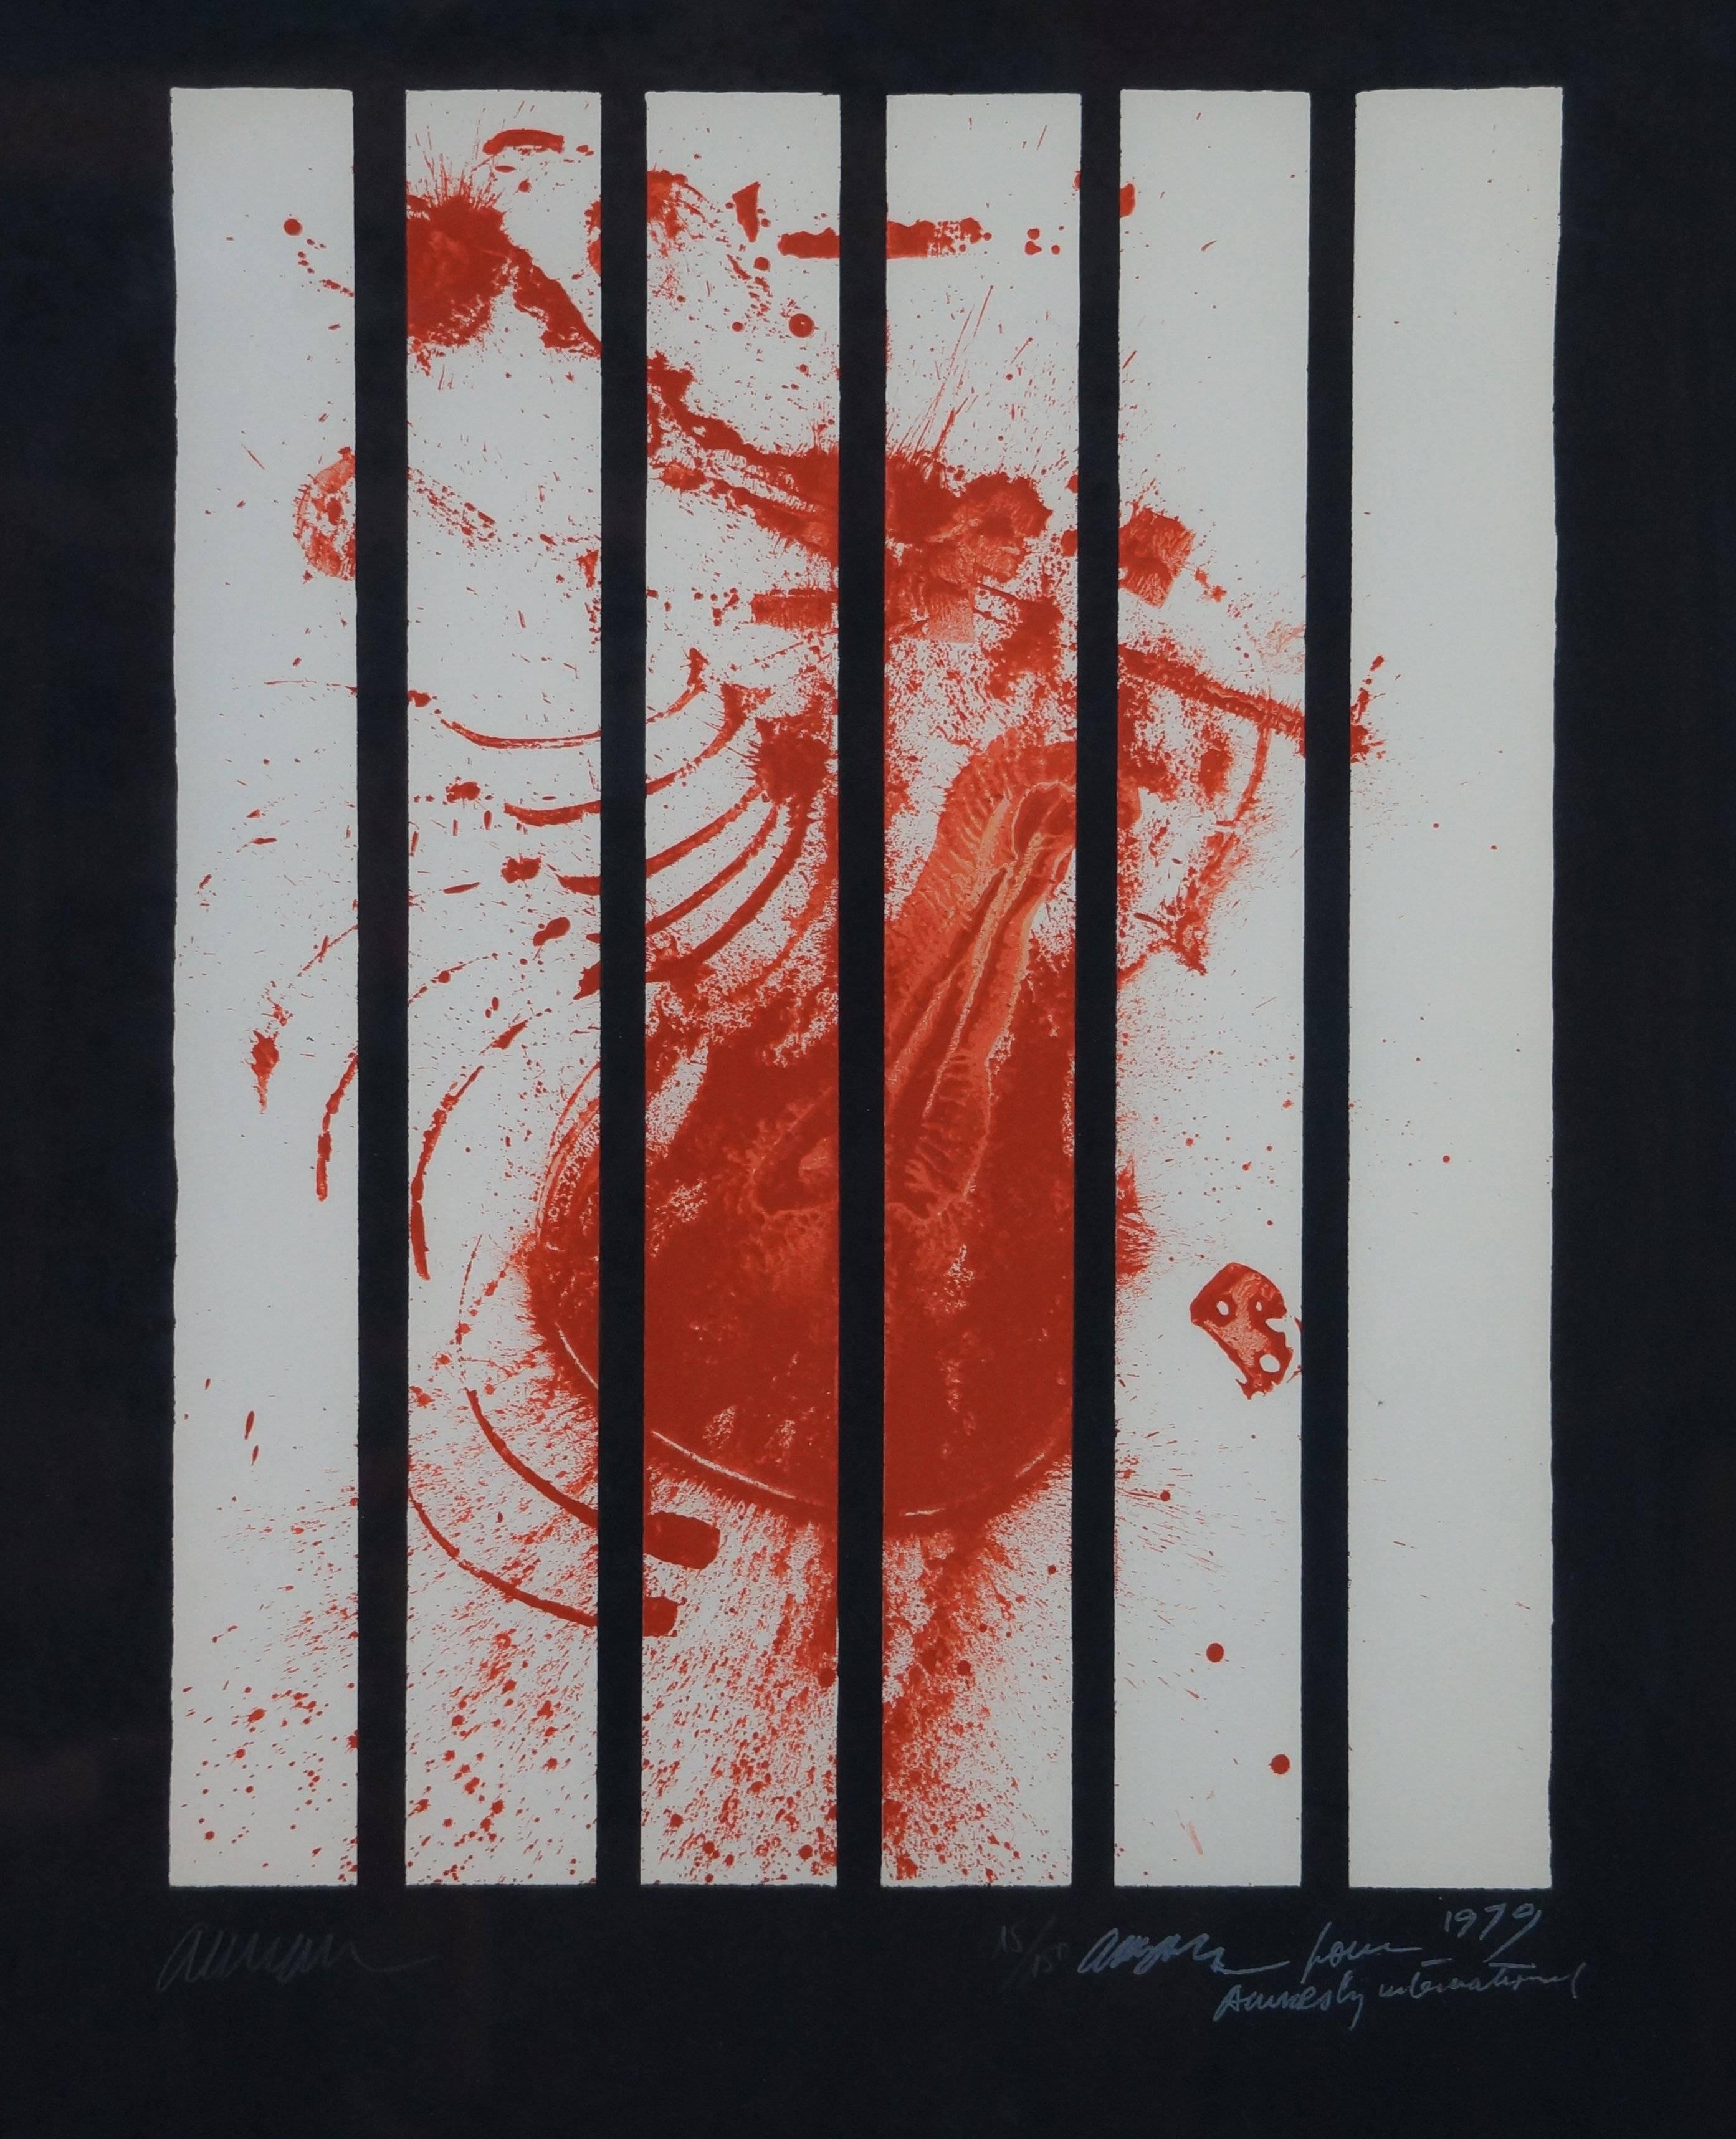 Abstrakte abstrakte Komposition AI, 1979 - Litograph, 86x66 cm, gerahmt – Print von Arman